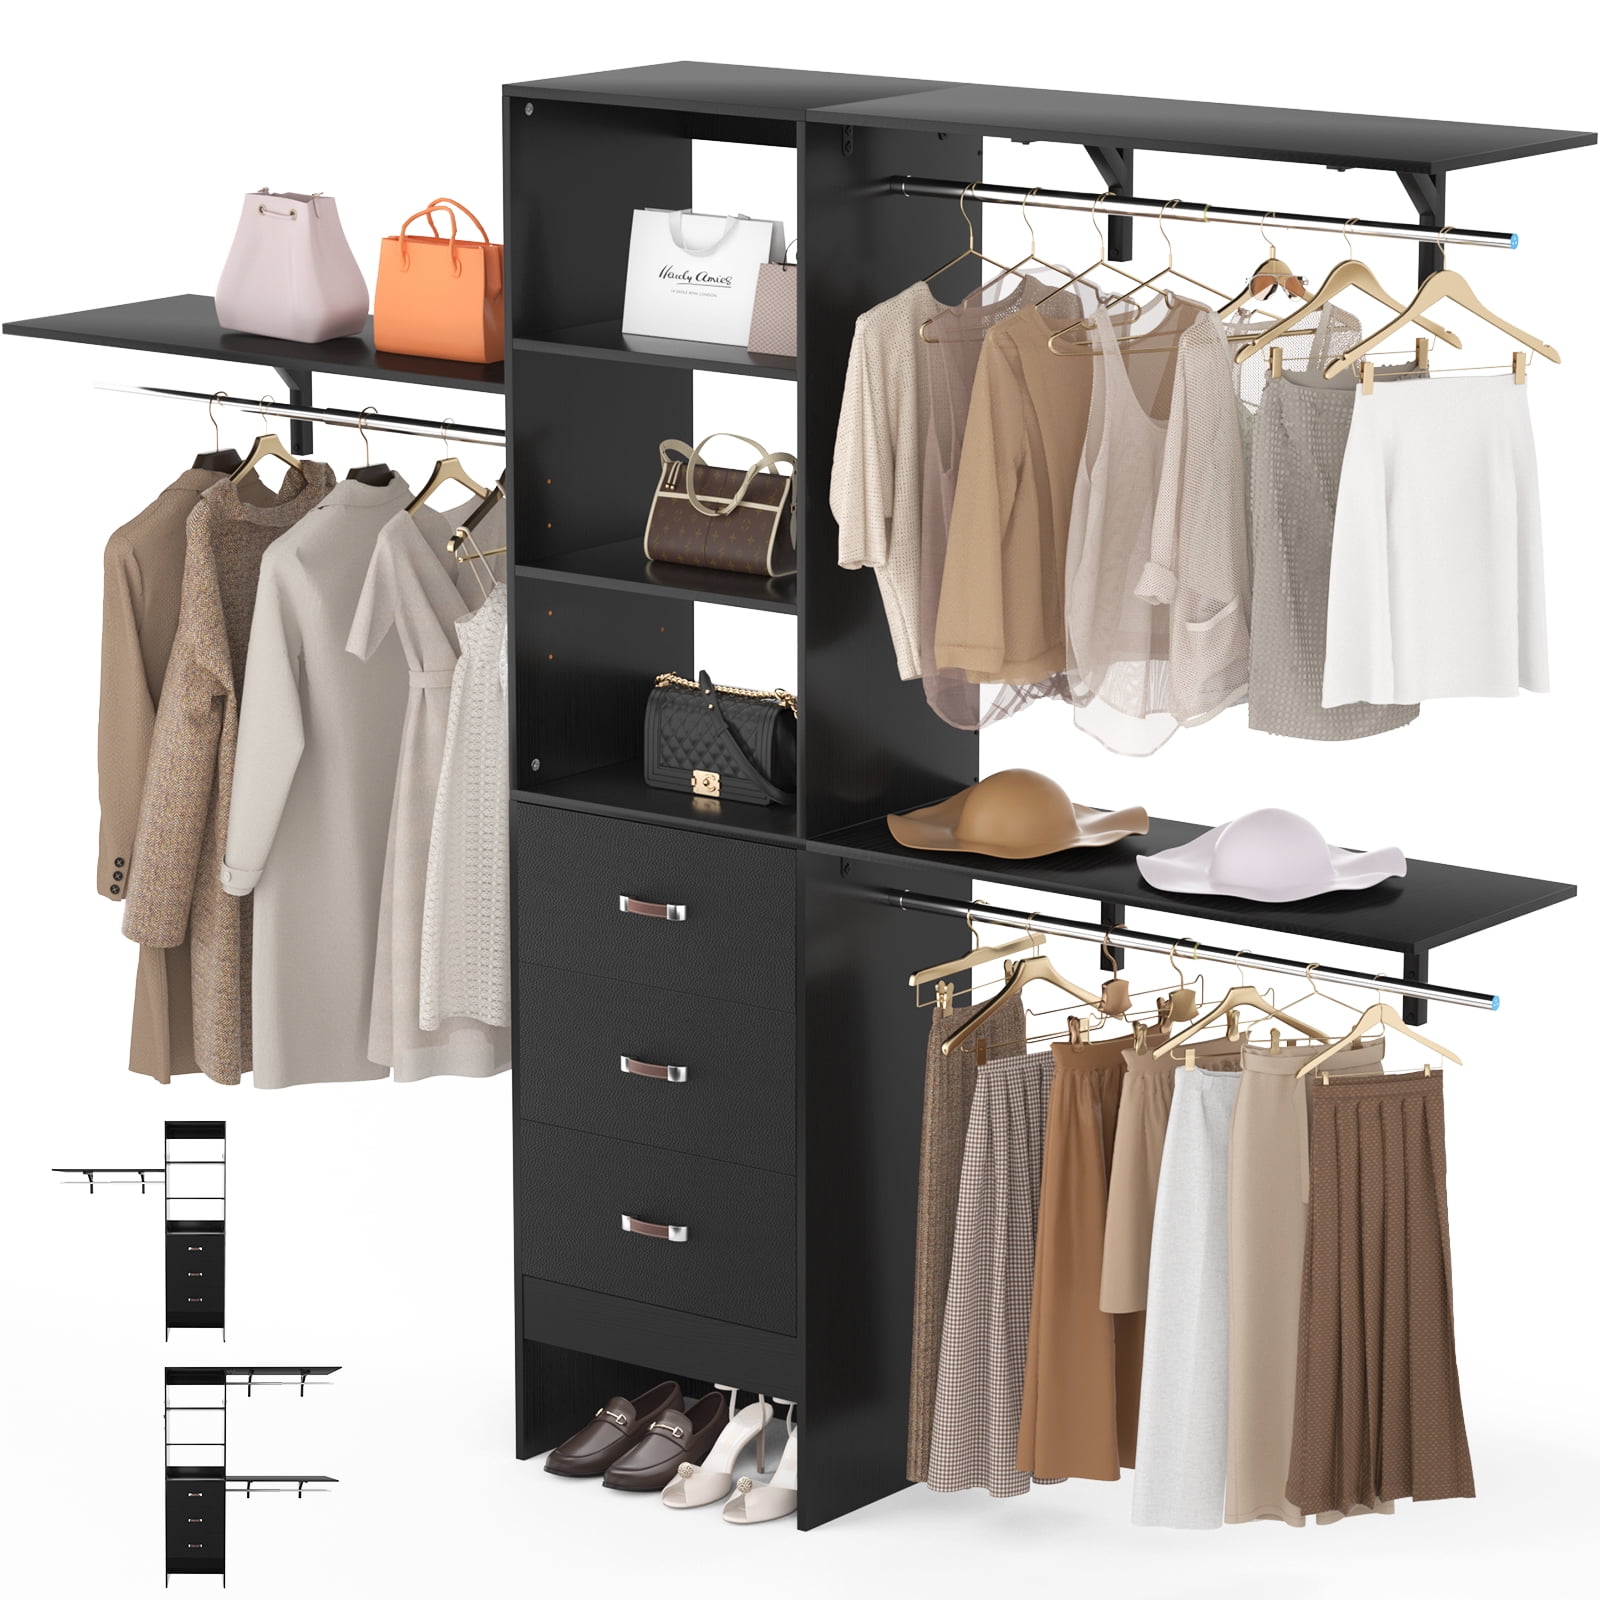 VIPEK V2E Wire Garment Rack Heavy Duty Clothes Rack with 6-Shelf Hanging  Closet Organizer & 2 Drawers, Max Load 550LBS - Black